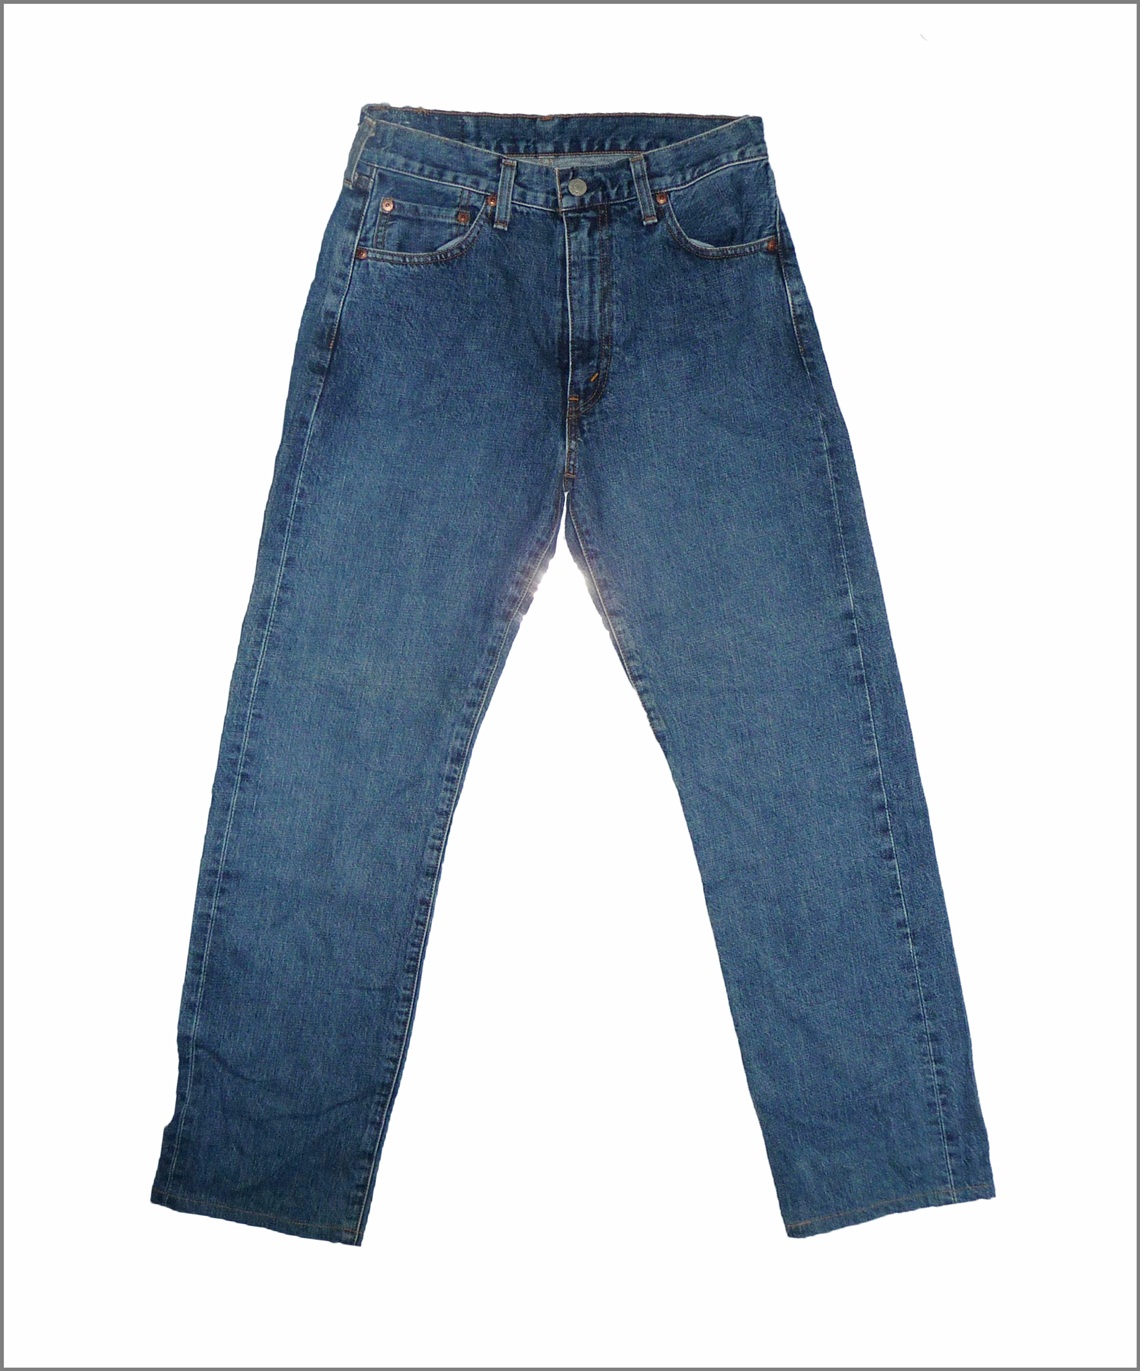 Dallek Shop - Bundle Online Shoping: Levis Irregular 502XX Jeans